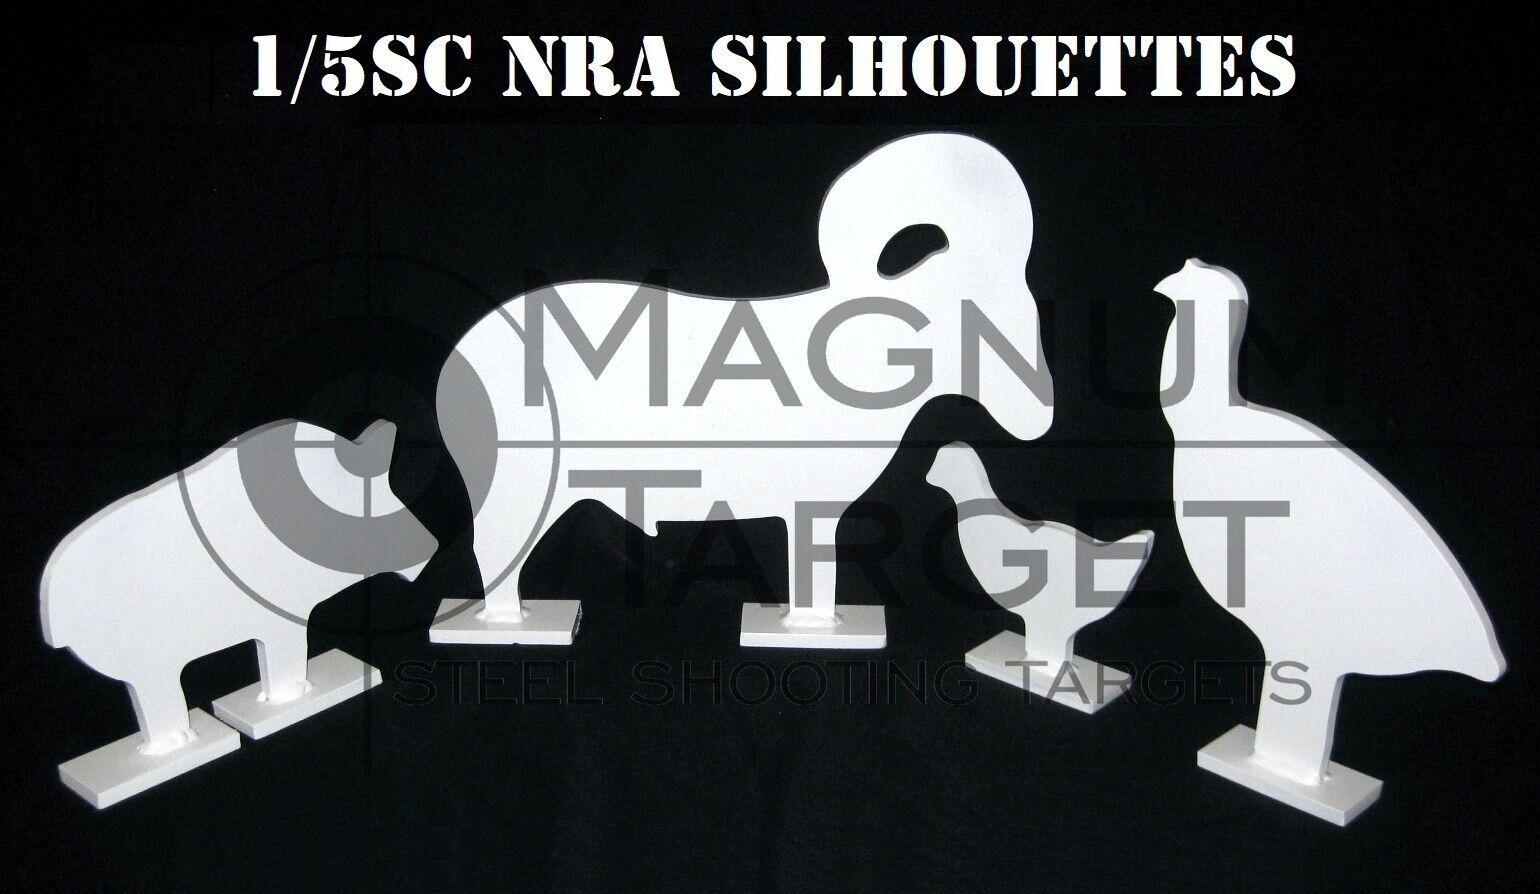 1/5sc. NRA/IHMSA Metallic Silhouette Targets - 4pc. Small Bore Rifle Knock-overs